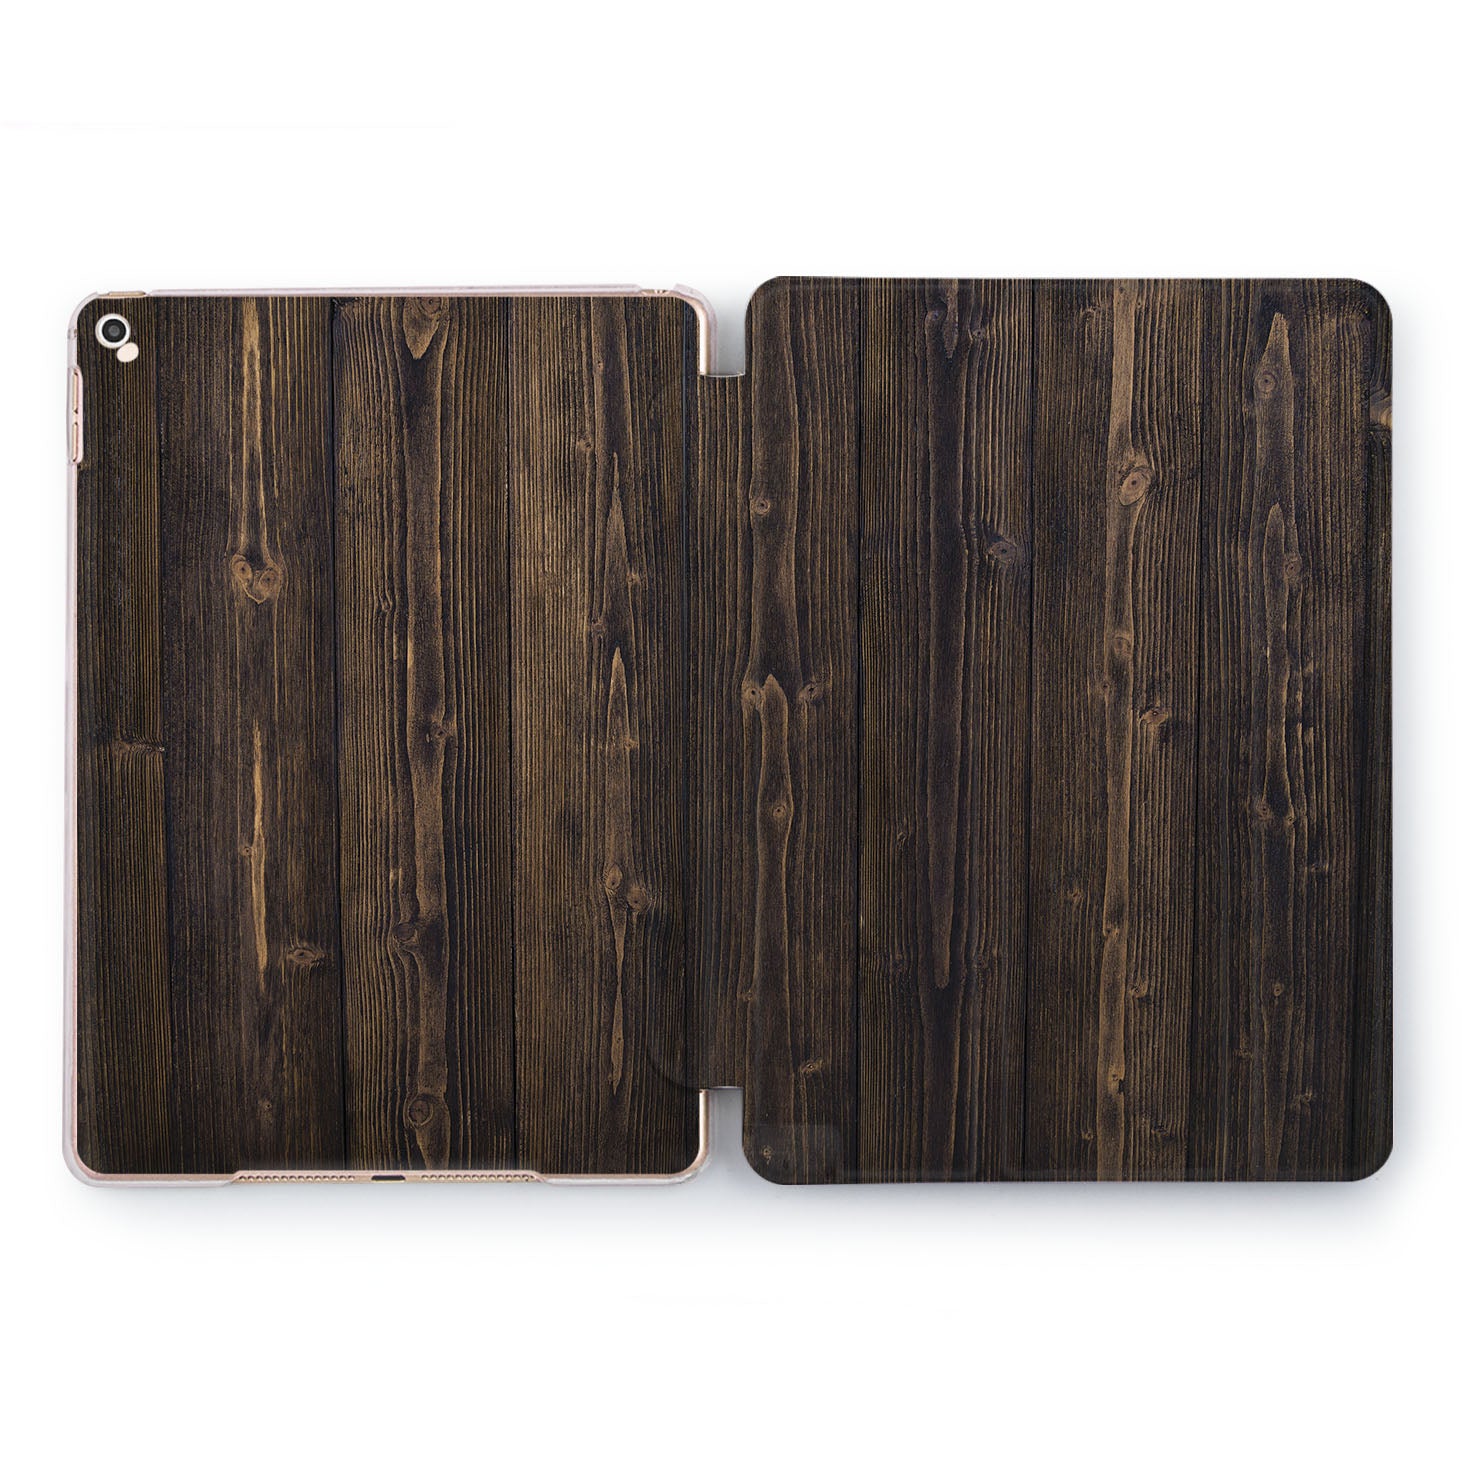 Lex Altern Dark Wood Case for your Apple tablet.